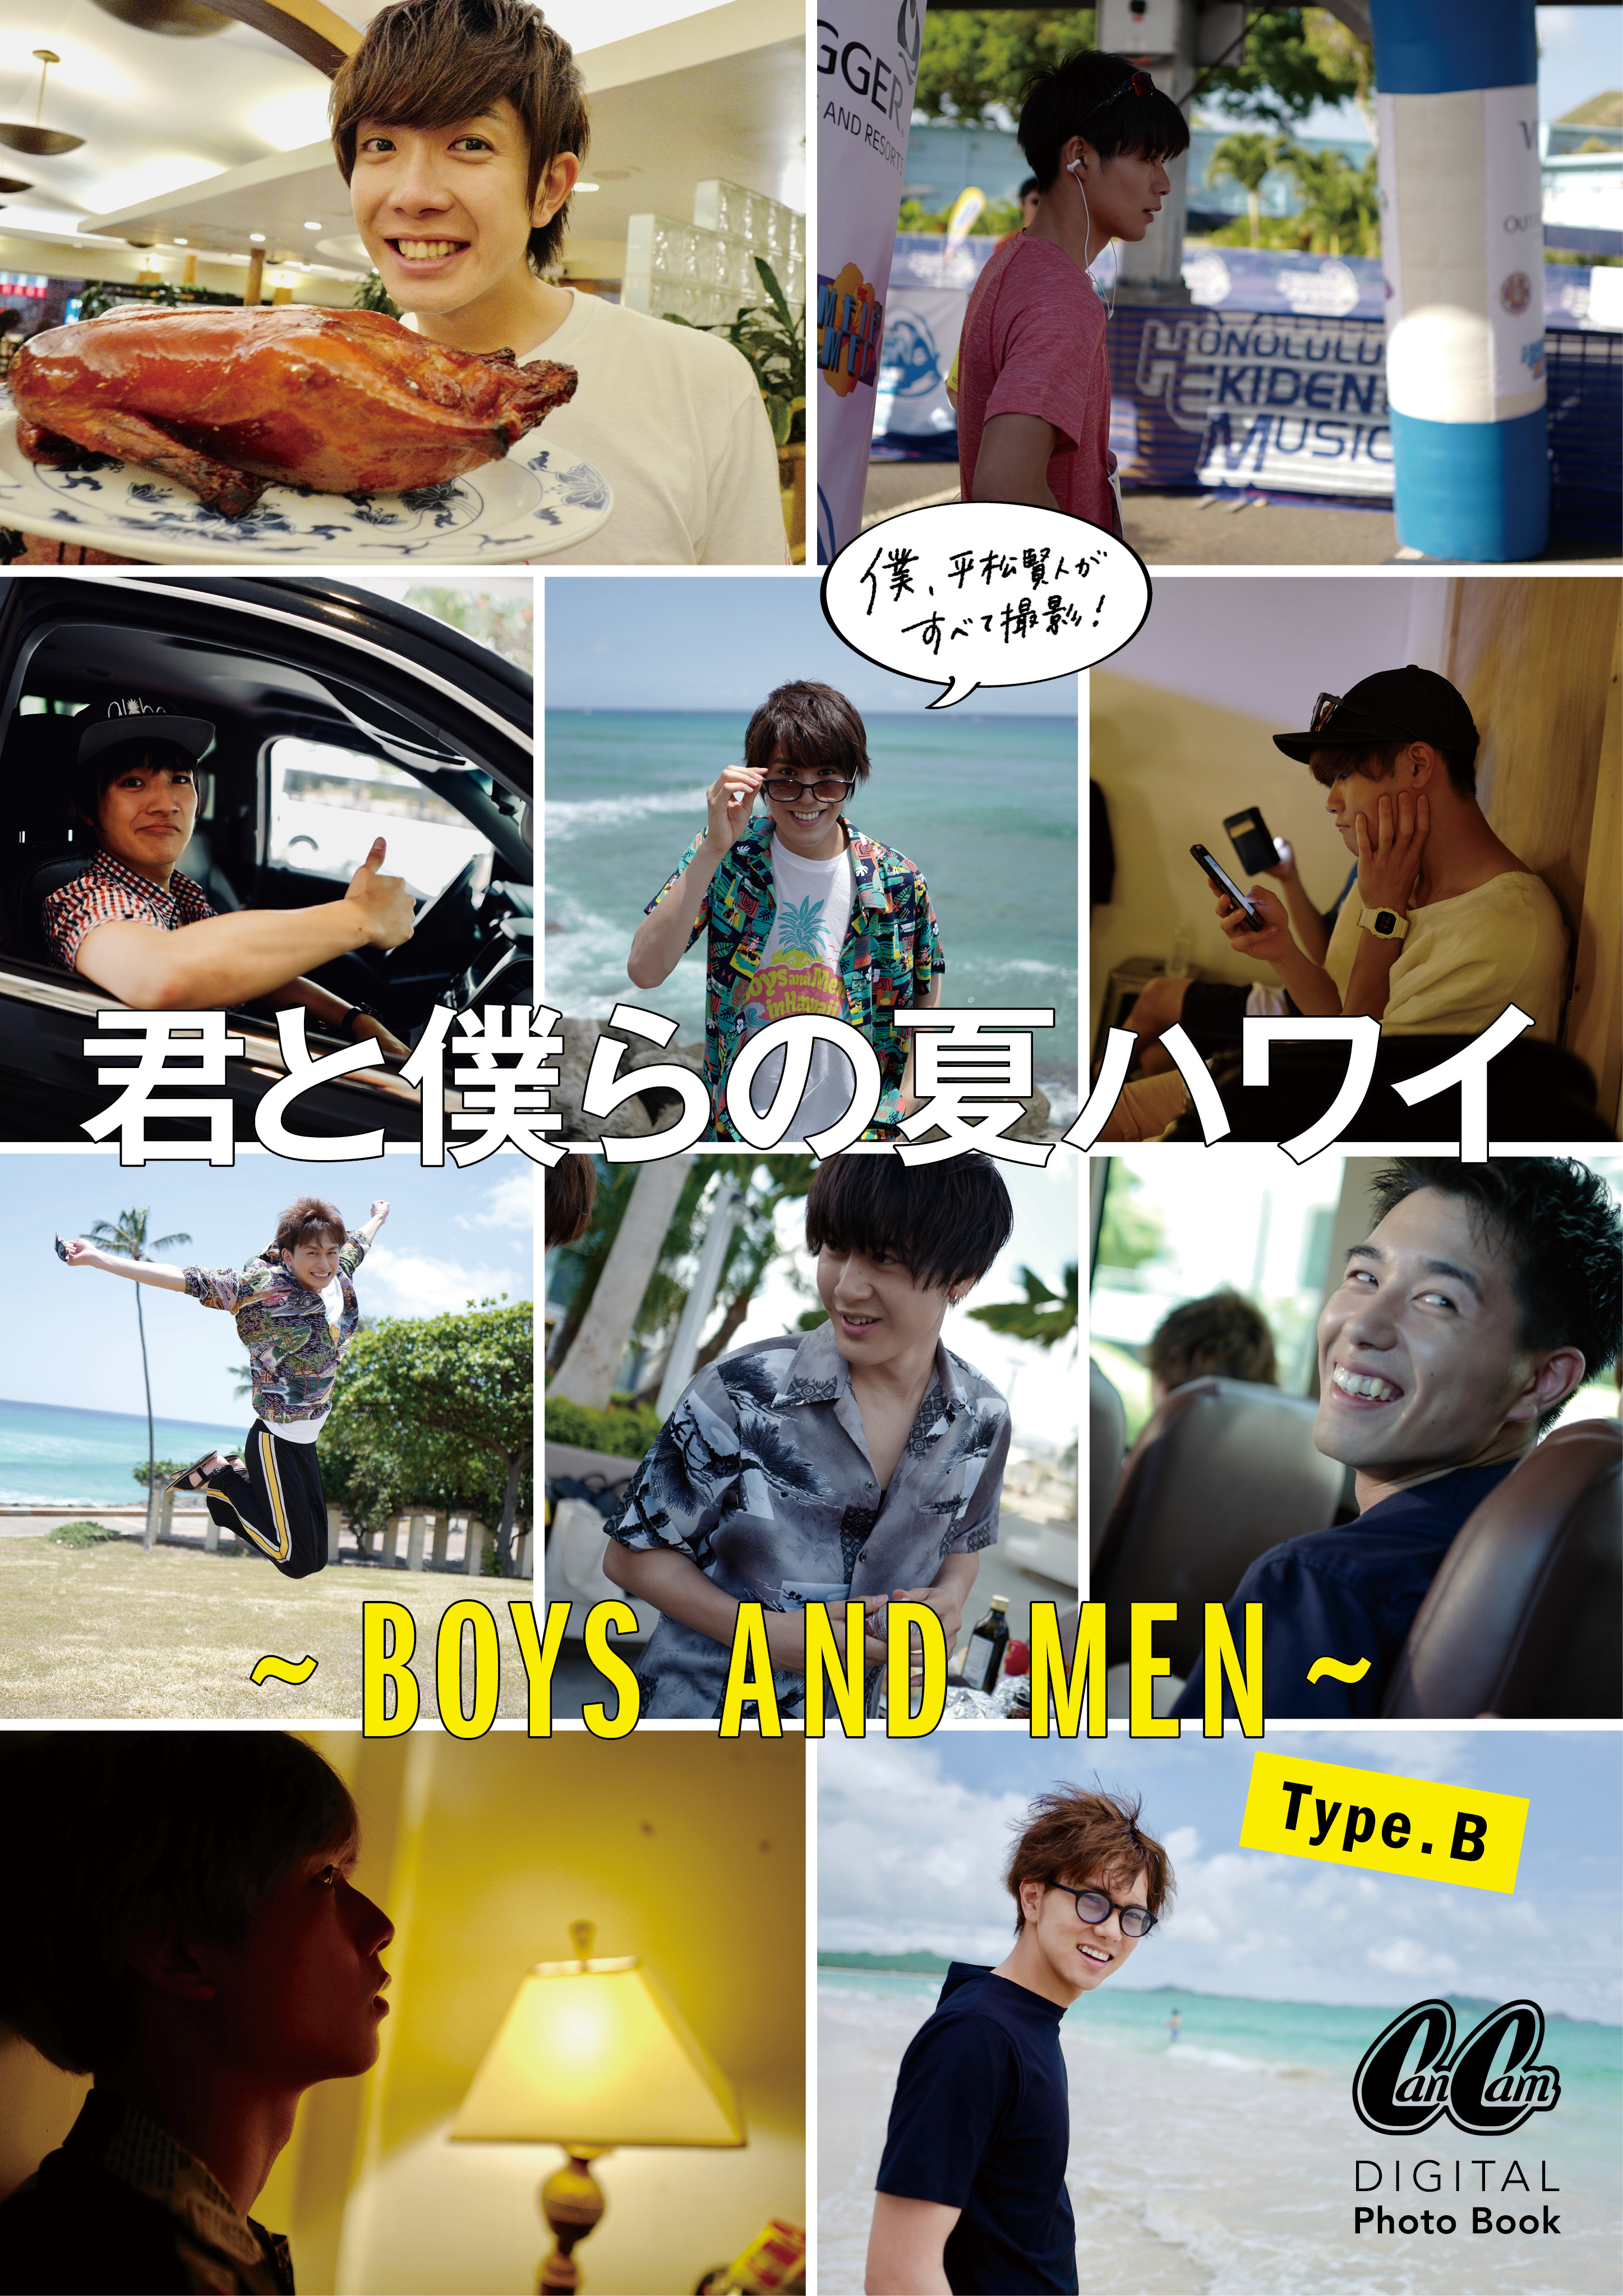 Boys And Men デジタル写真集第二弾 君と僕らの夏ハワイ 発売決定 株式会社小学館のプレスリリース